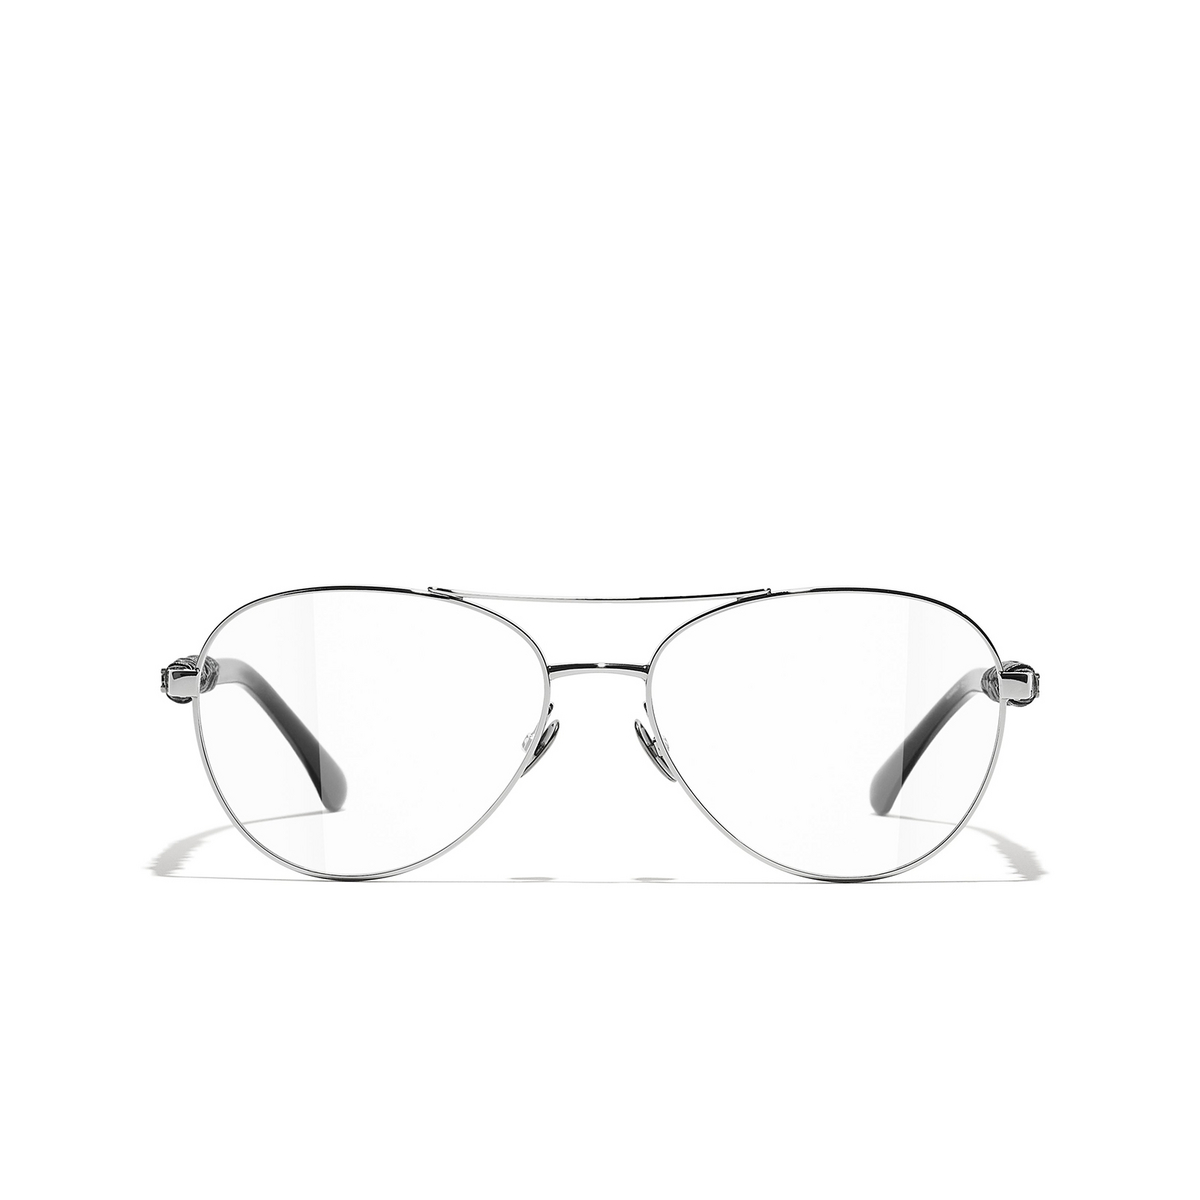 CHANEL pilot Eyeglasses C108 Dark Silver & Black - front view